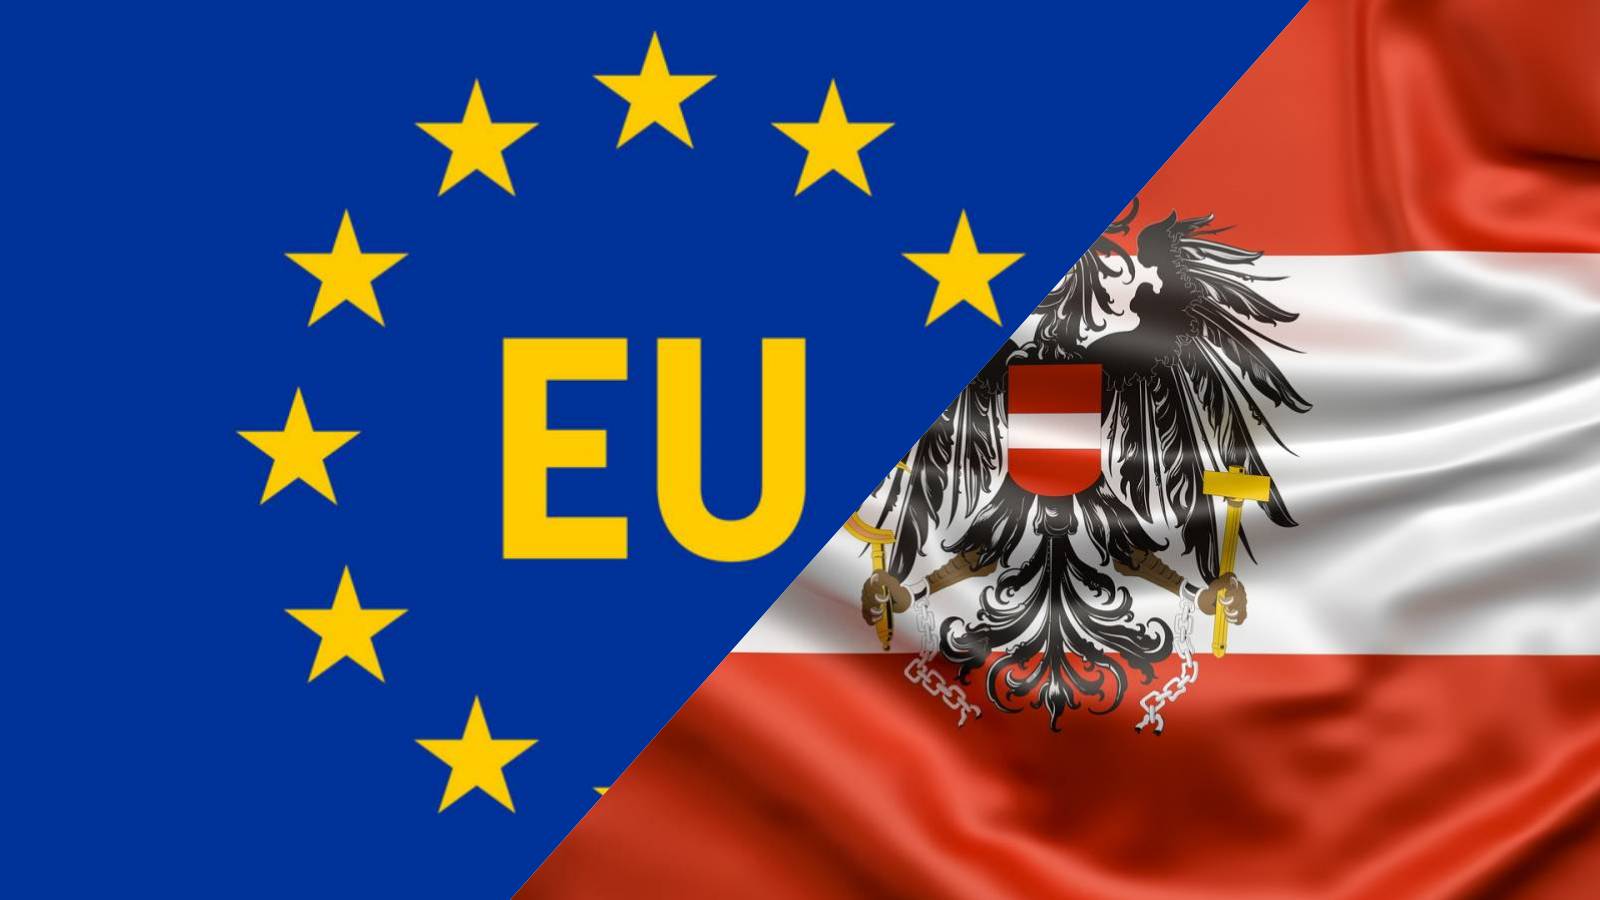 Austria has no problems Romania's accession to Schengen The major announcement Europe has made